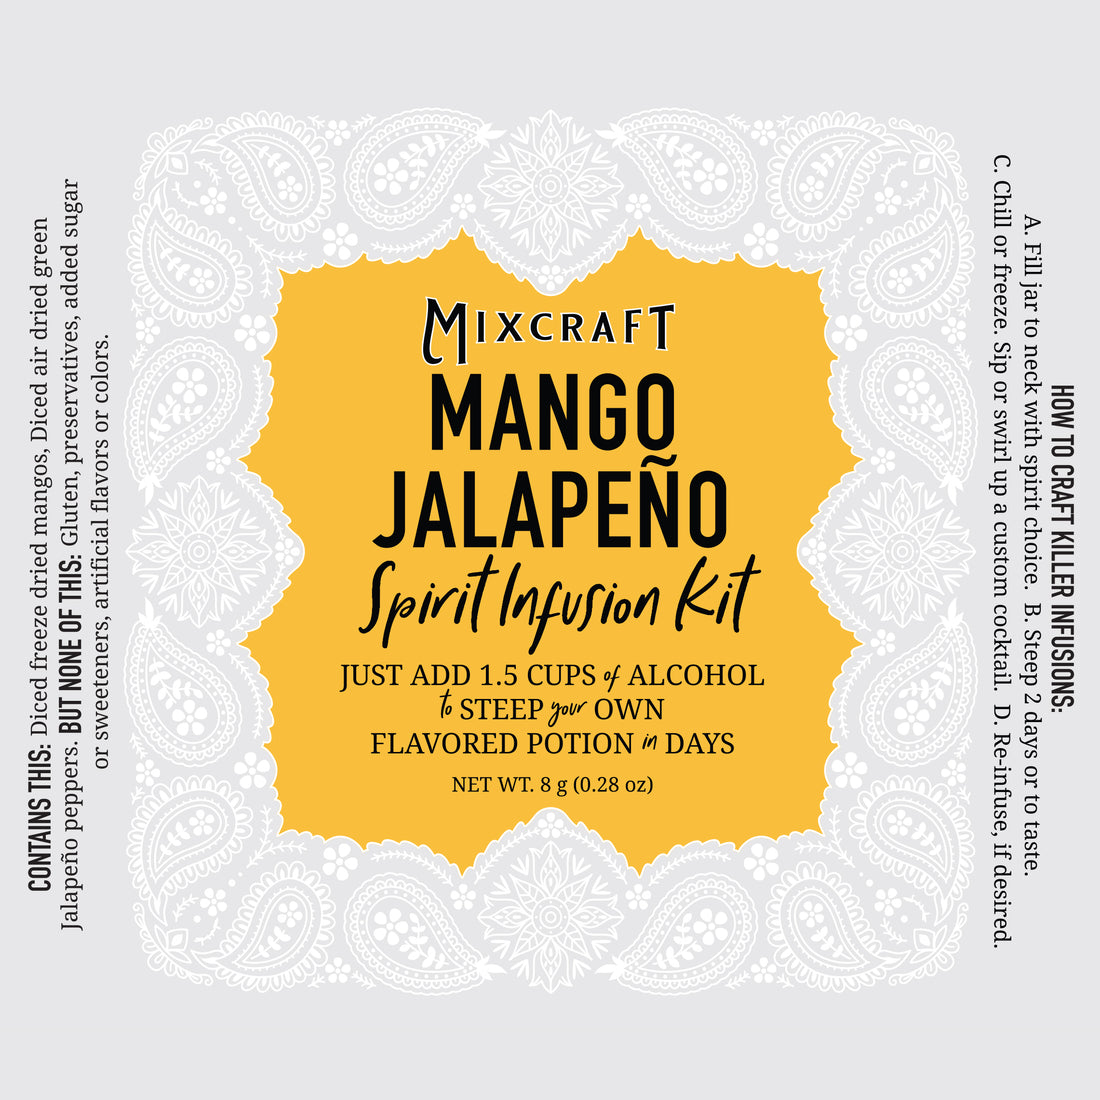 MixCraft Mango Jalapeno bottle label  Edit alt text